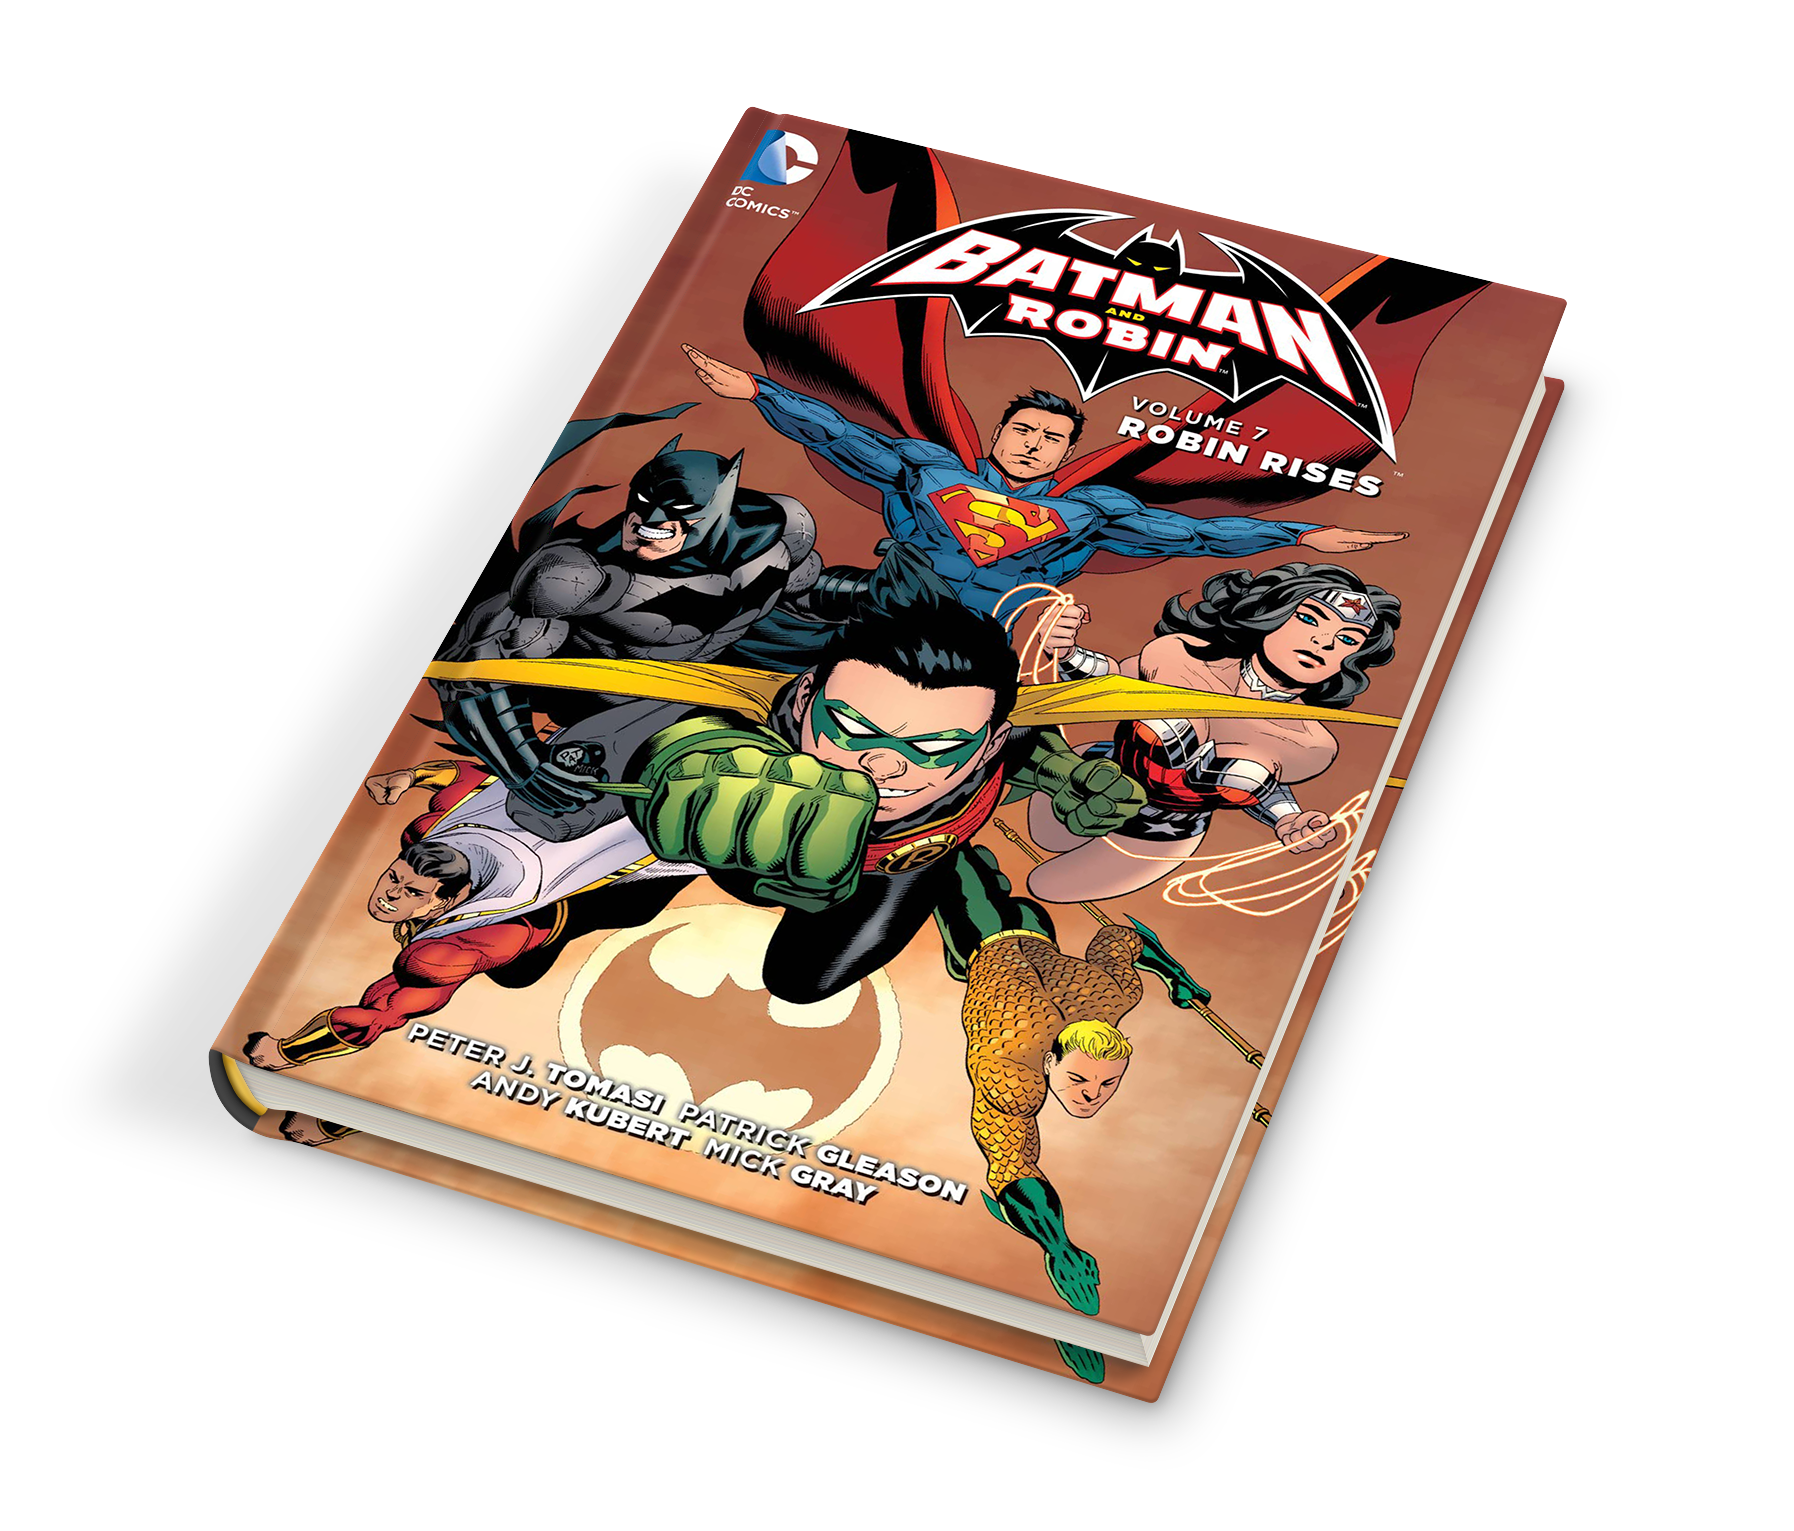 Batman and Robin, Volume 1: Born to Kill by Peter J. Tomasi